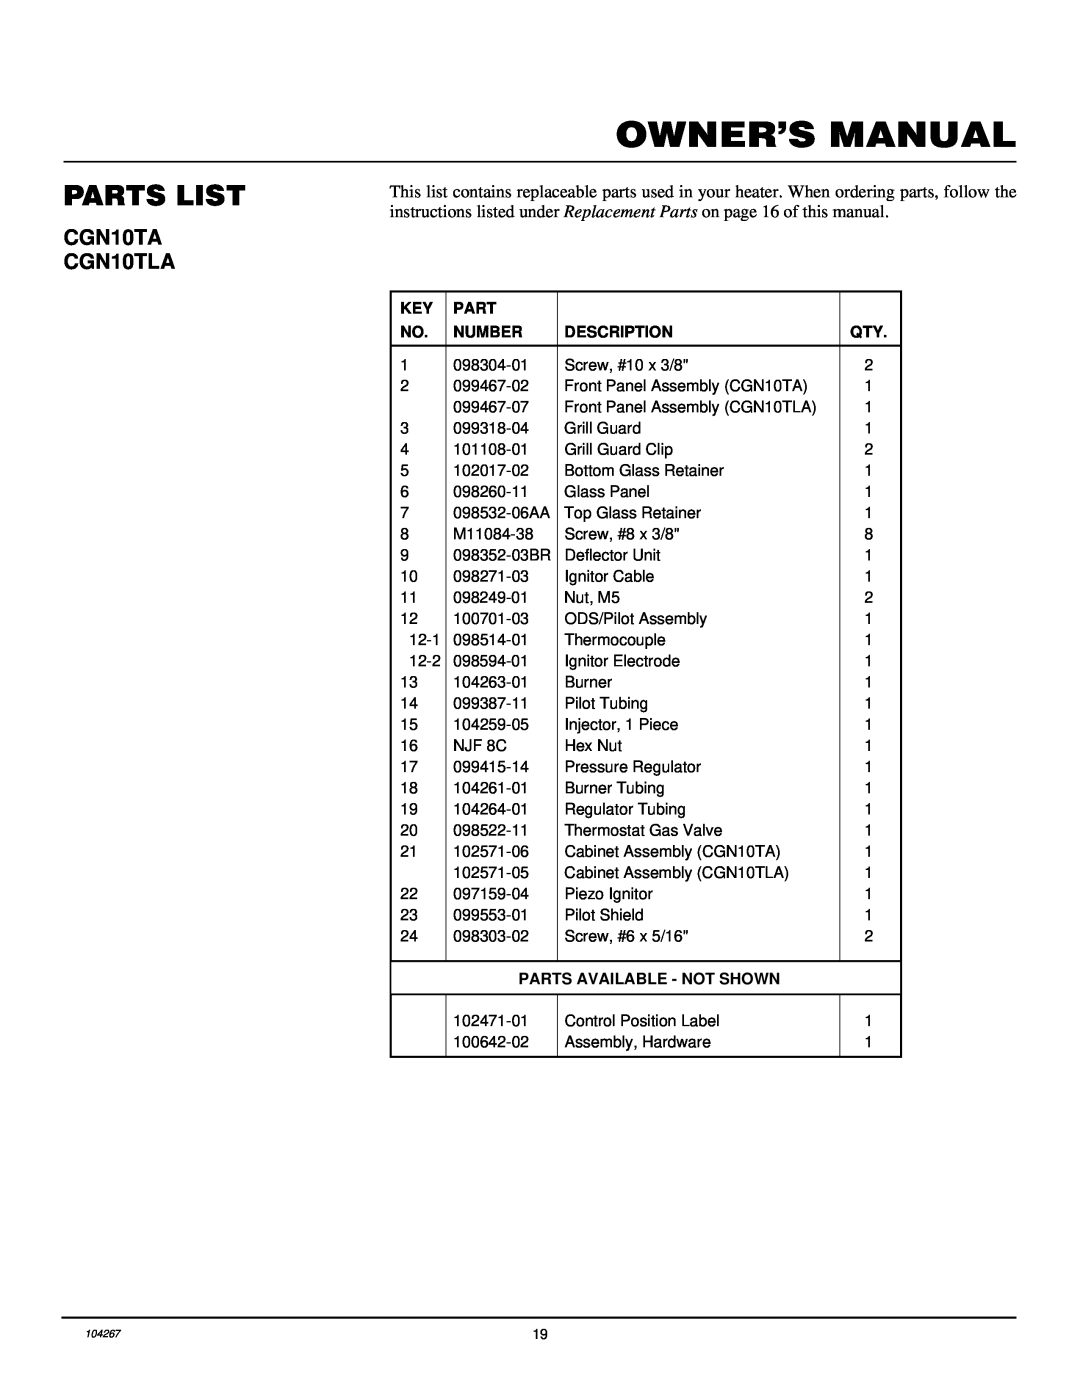 Desa installation manual Parts List, CGN10TA CGN10TLA 